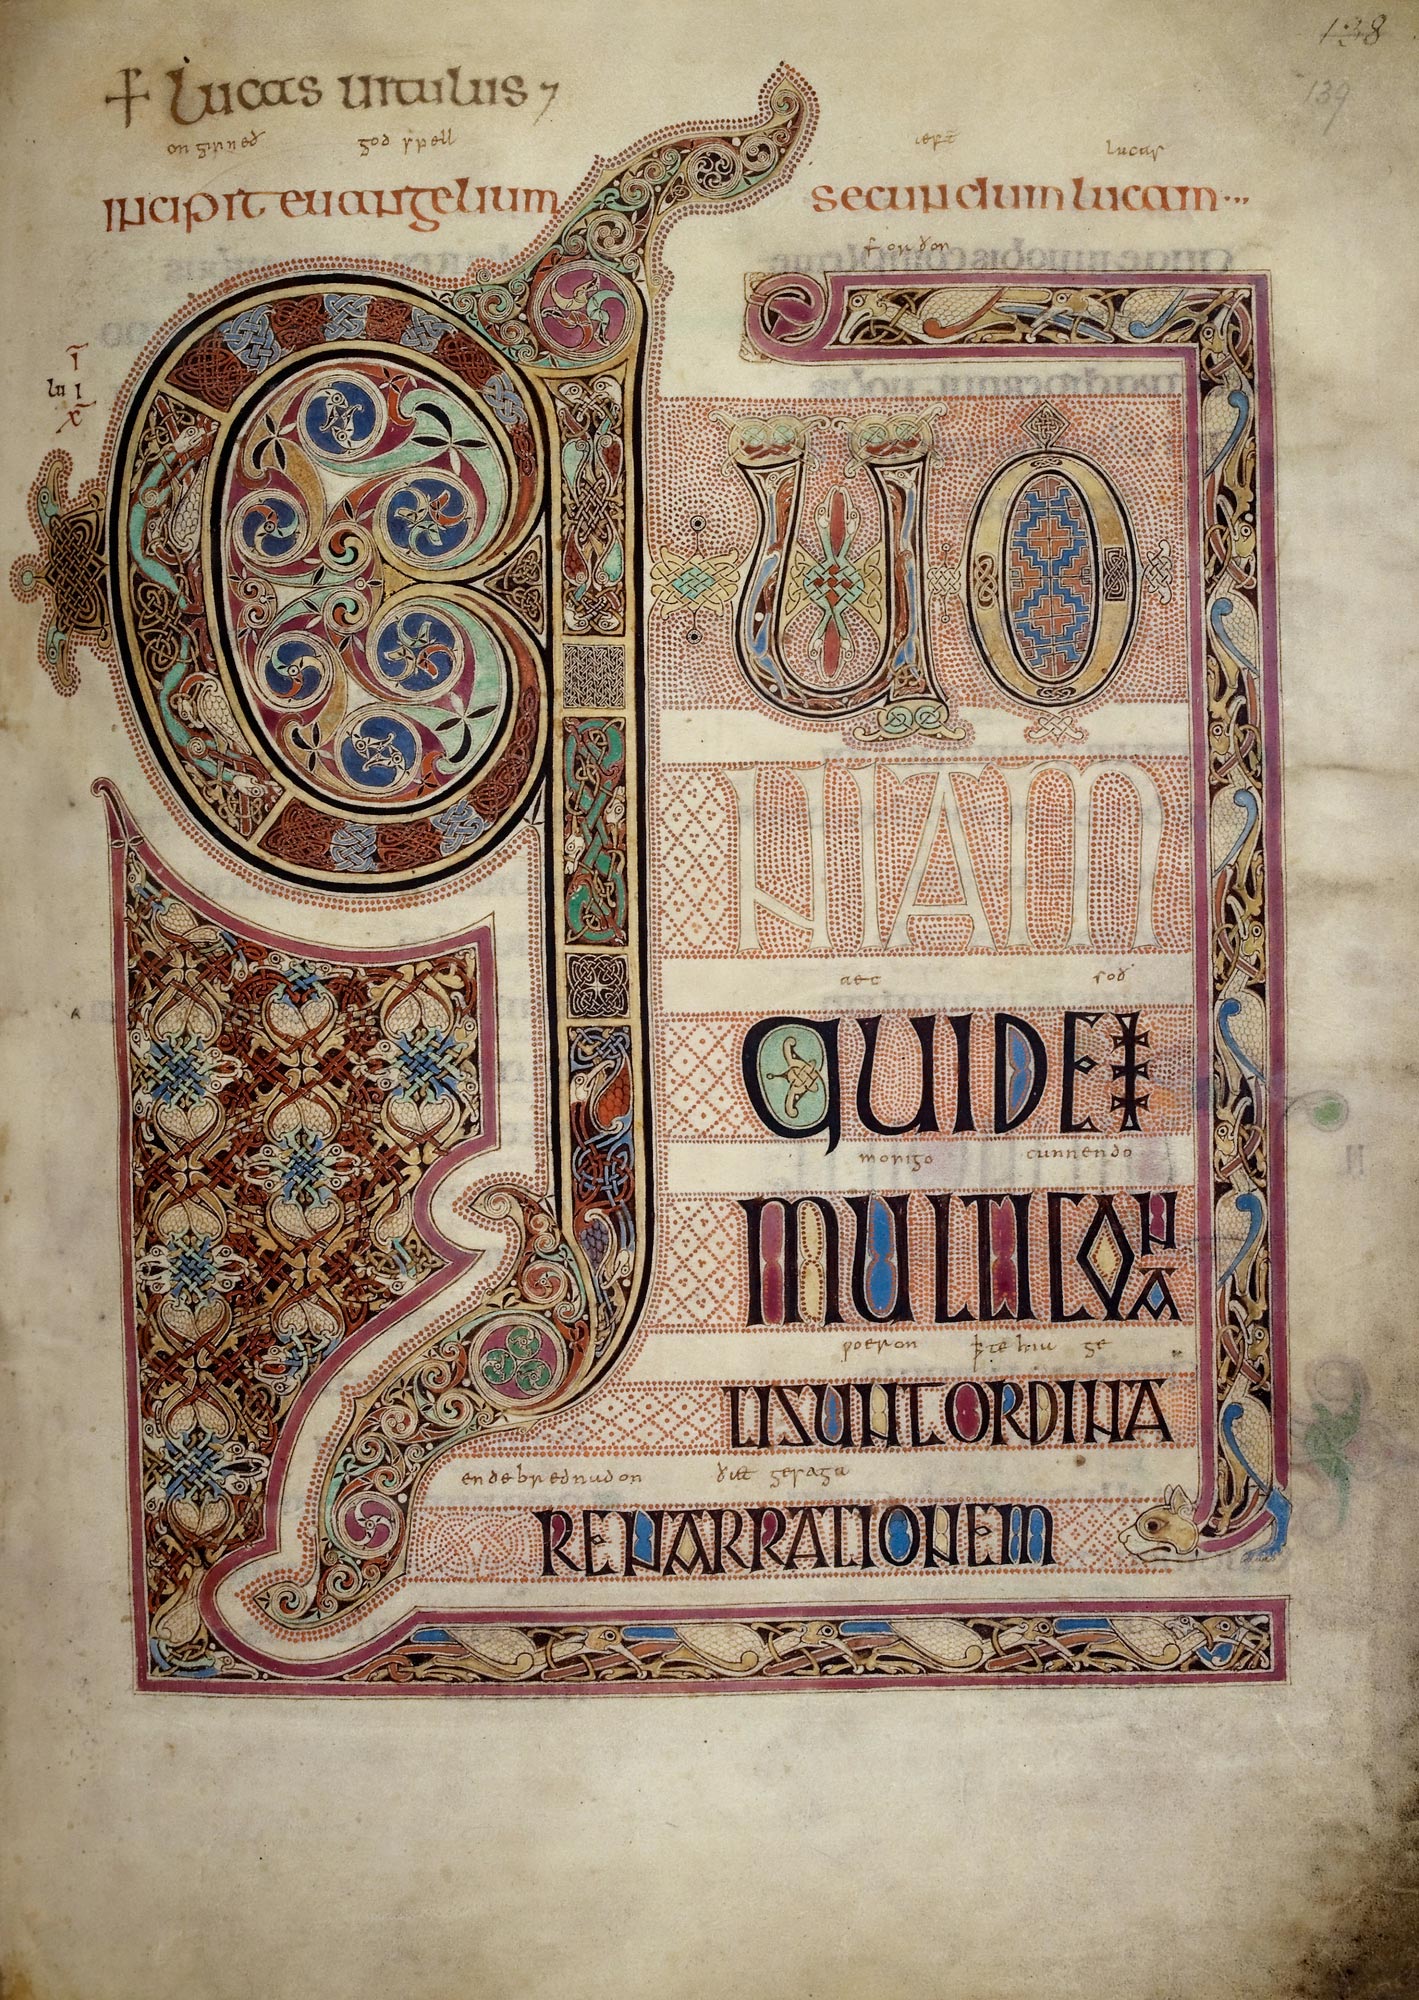 Luke Gospel incipit page (folio 139) from Lindisfarne Gospels